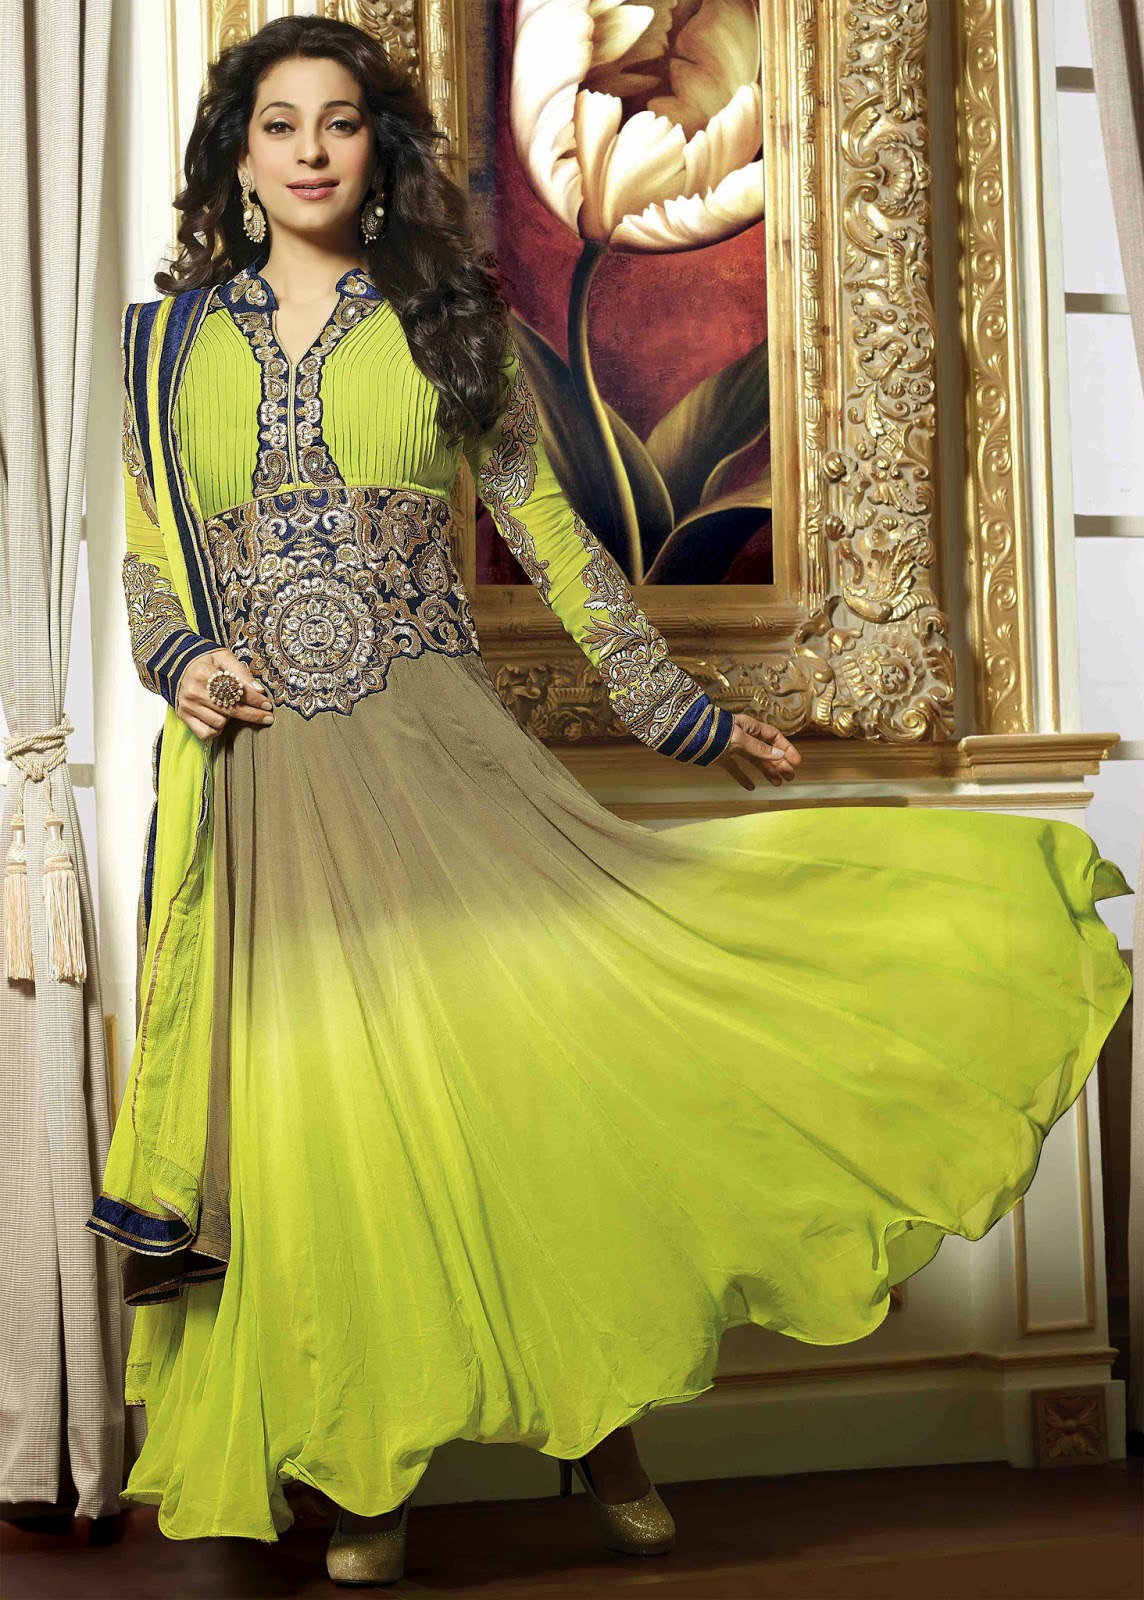 Beauty Miss India Juhi Chawla Anarkali Suit Wallpapers Free Download